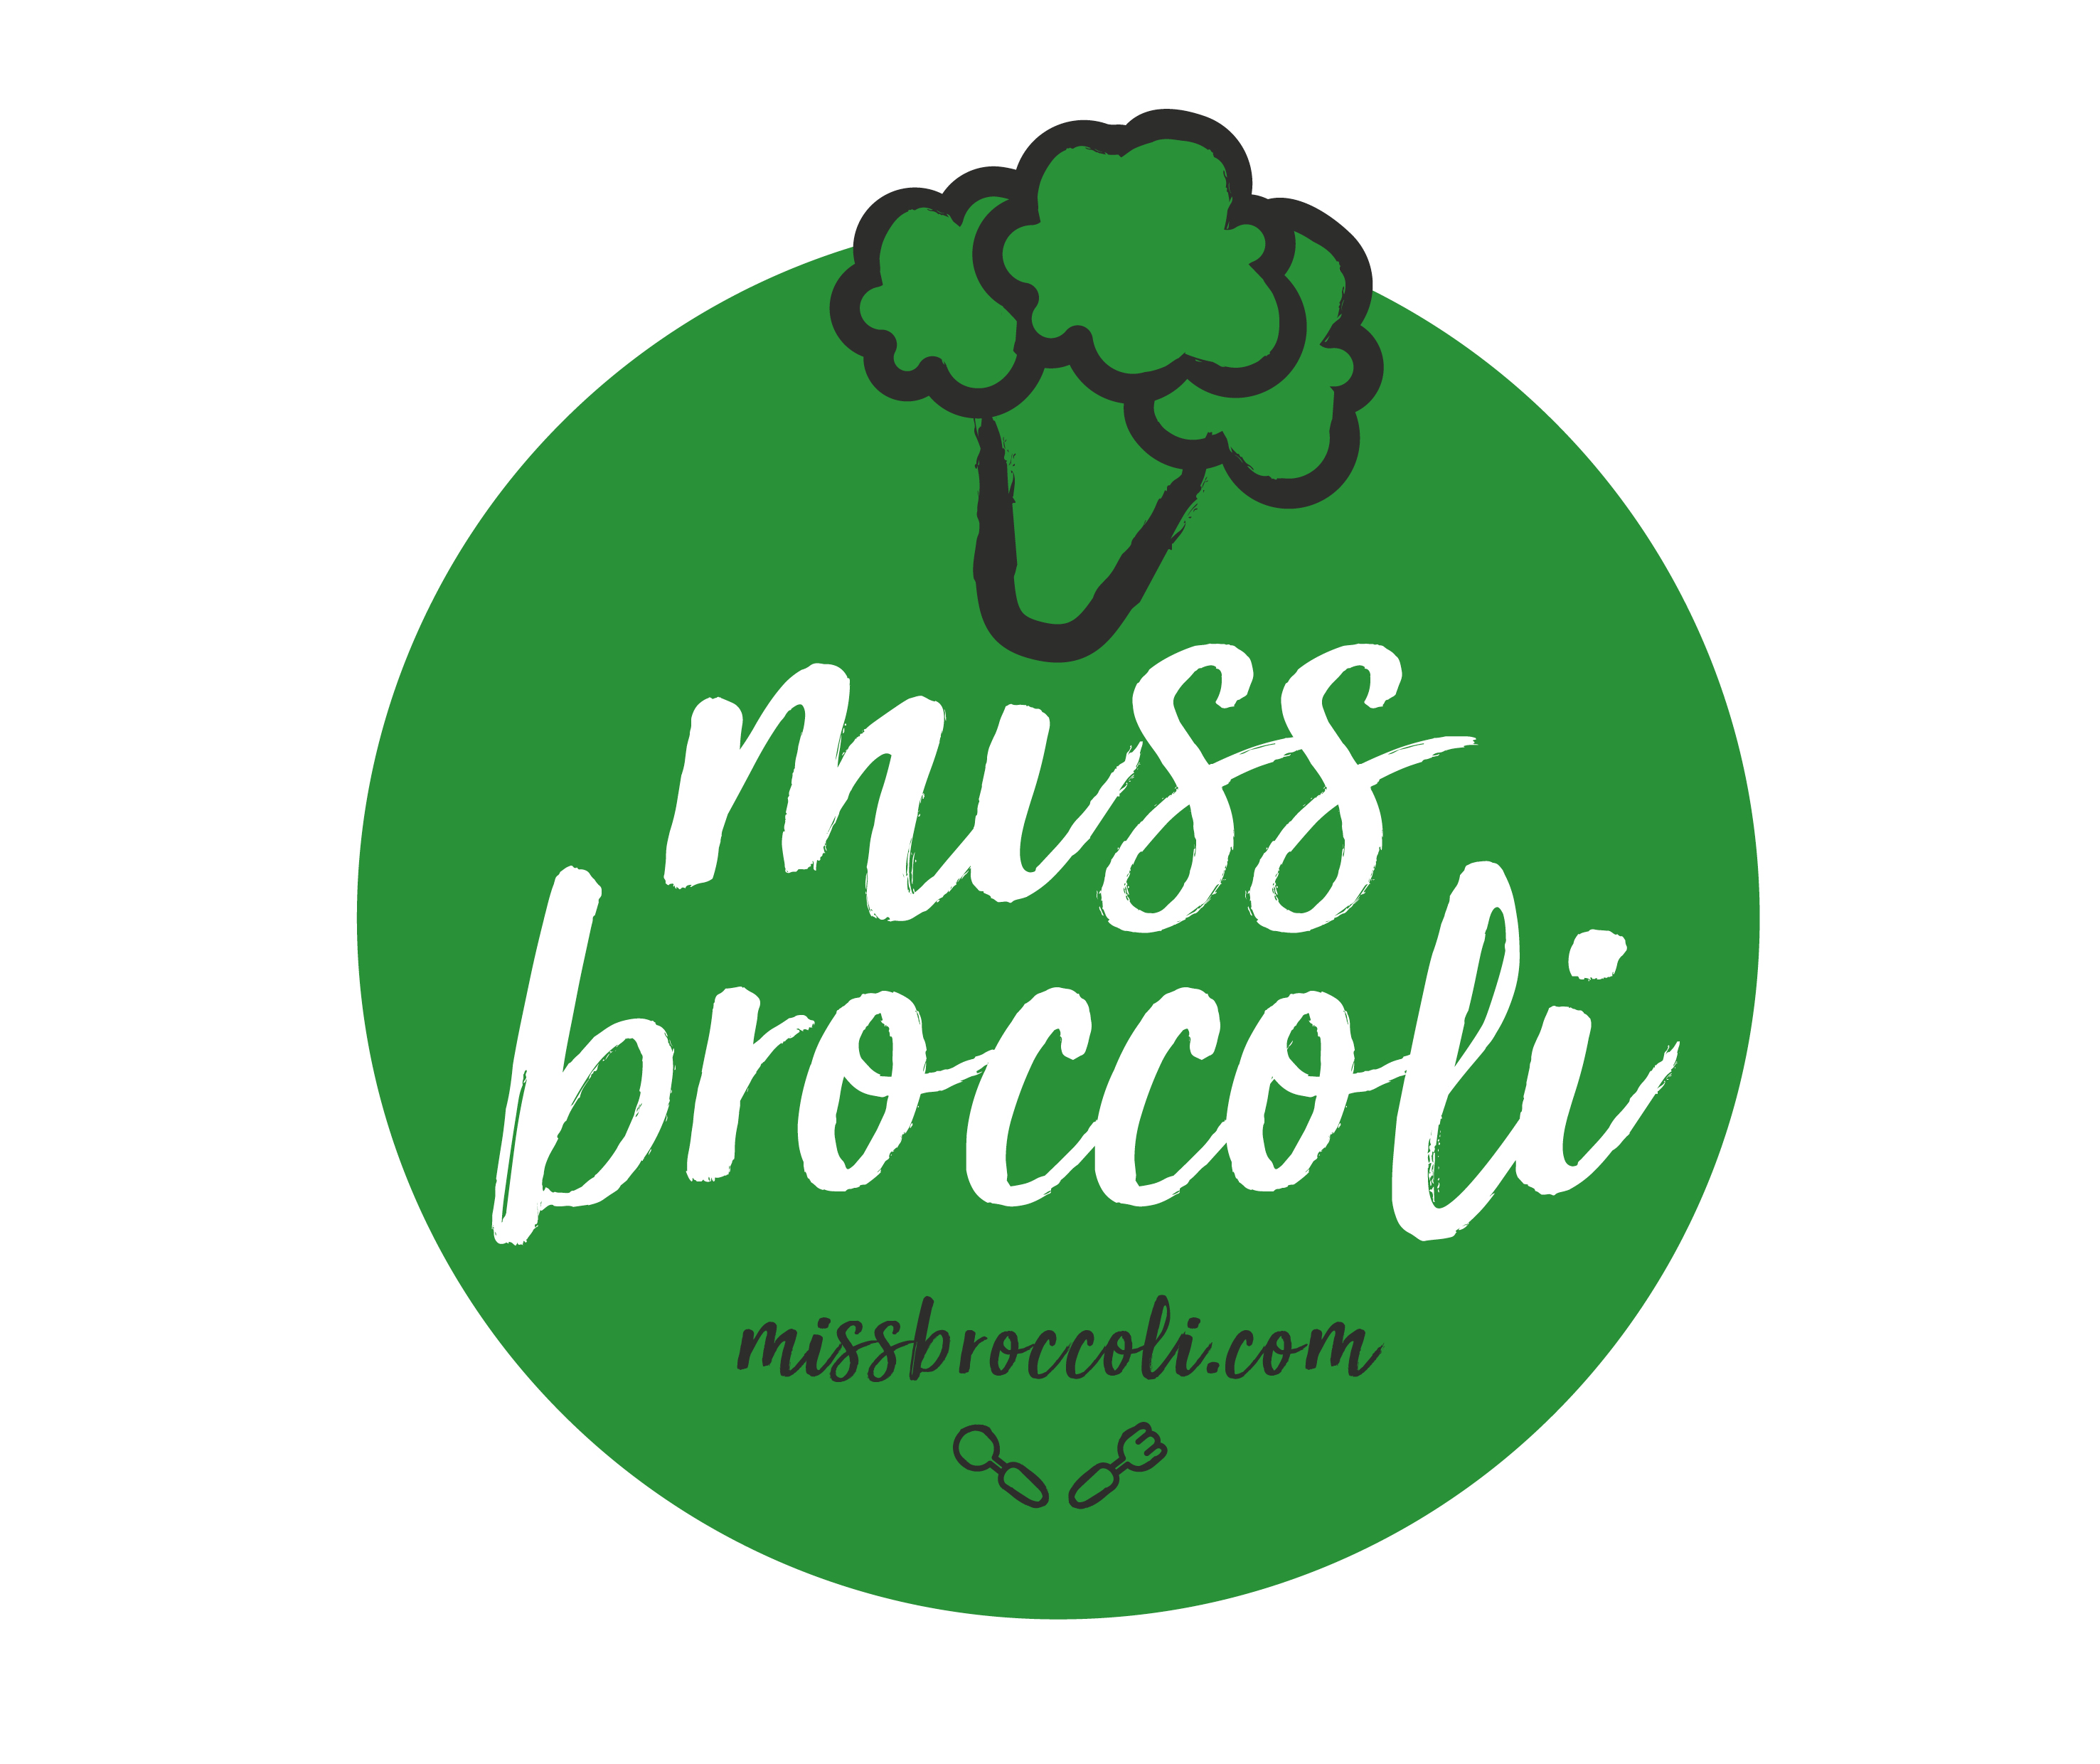 (c) Missbroccoli.com